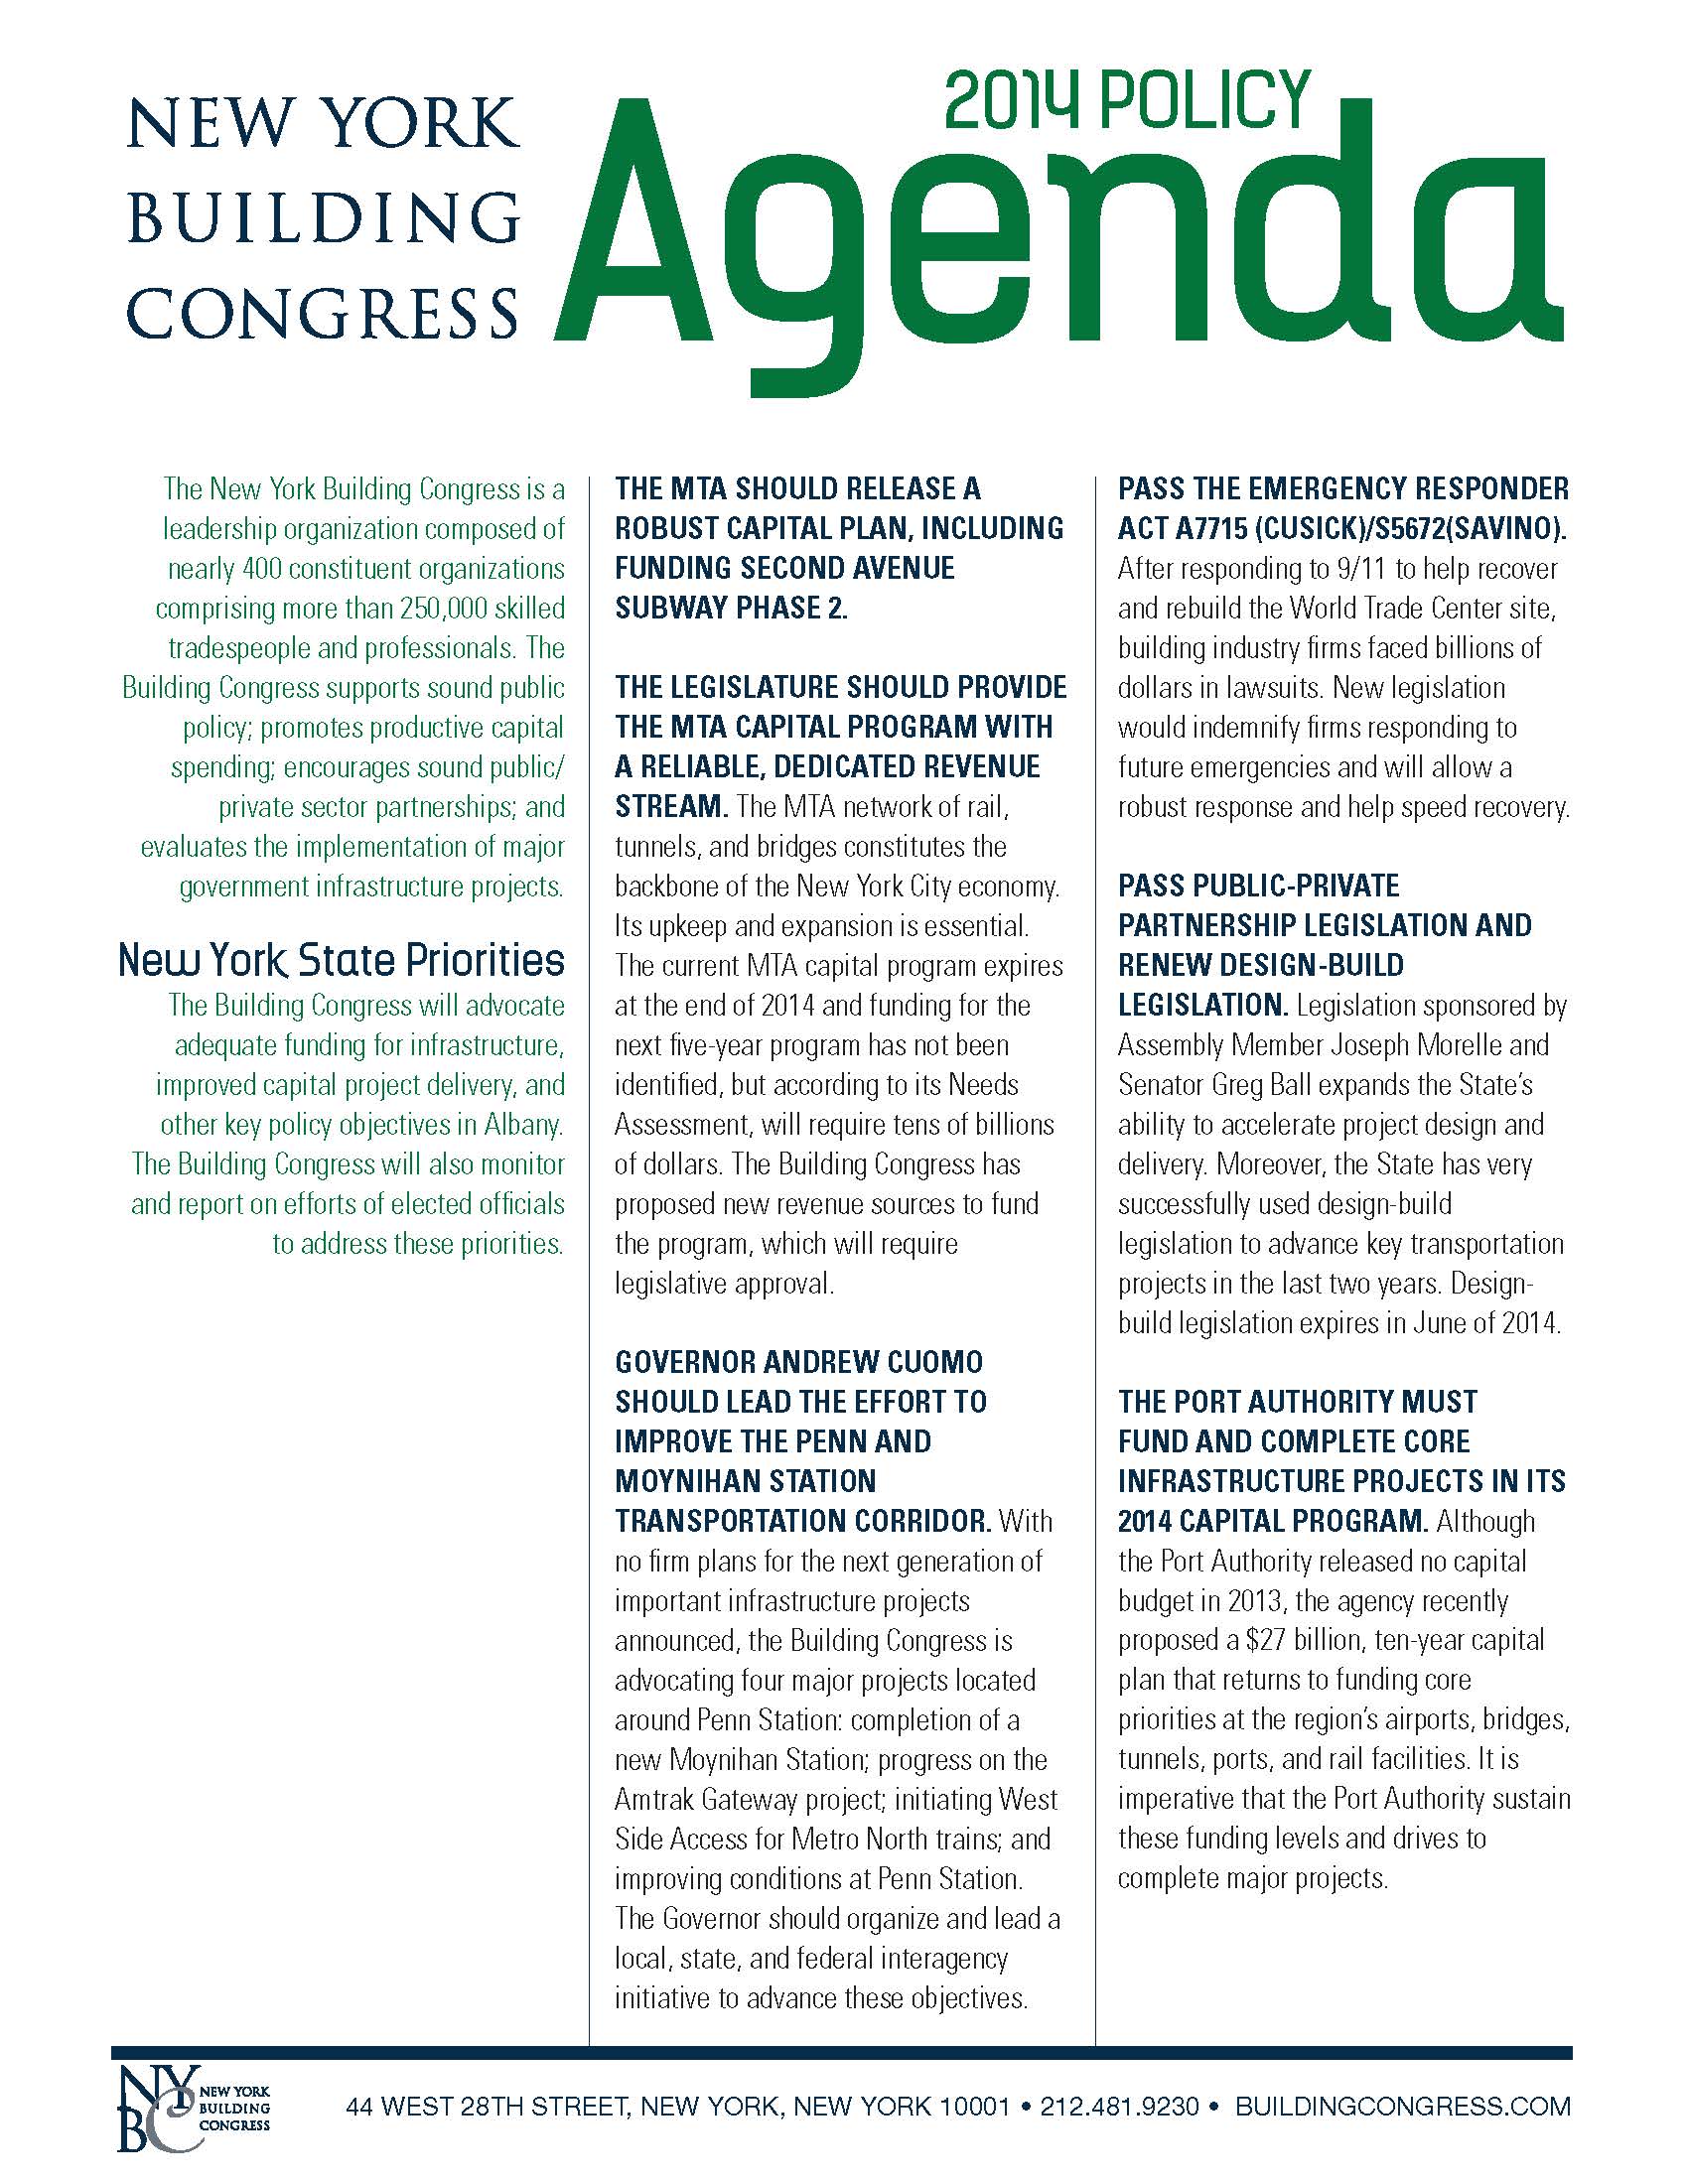 NYBC 2014 Policy Agenda - page 1